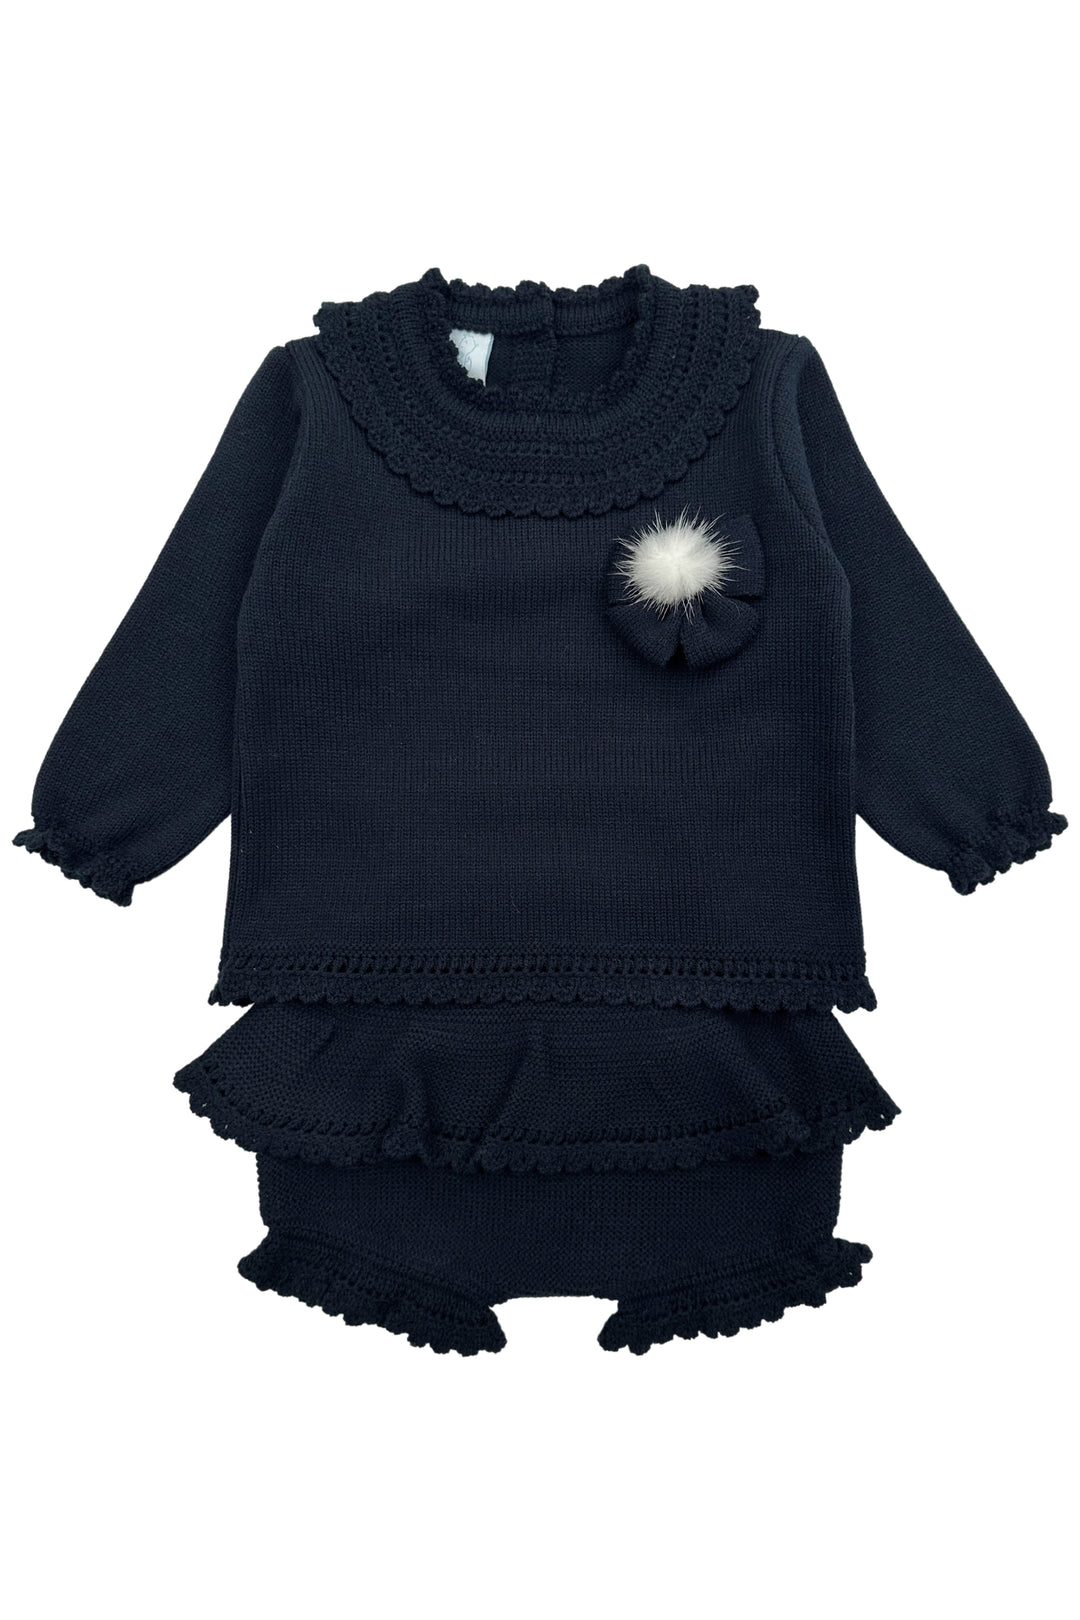 Granlei "Aida" Navy Knit Top & Shorts | Millie and John